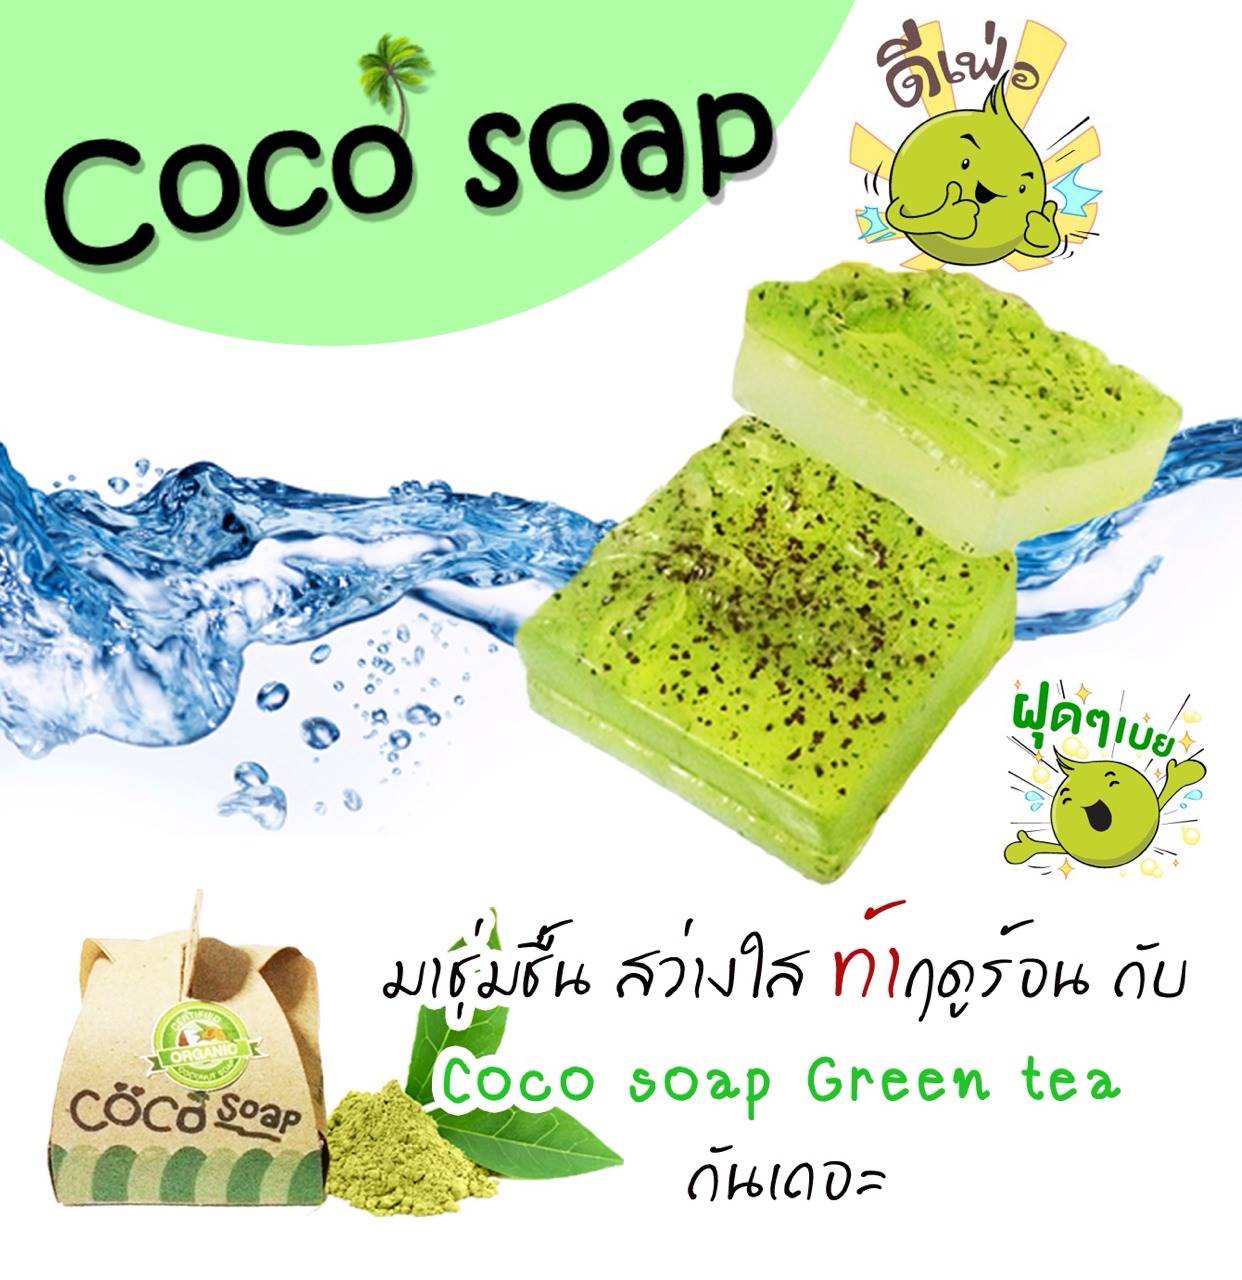 CoCo Soap Plus green tea, CoCo Soap green tea, coco soap, สบู่มะพร้าว coco soap, สบู่มะพร้าวชาเขียว, สบู่มะพร้าว, สบู่มะพร้าว สรรพคุณ, สบู่ไข่ขาวสวีเดน, สบู่ล้างหน้า, สบู่ล้างหน้าที่ดีที่สุด, สบู่ล้างหน้า cetaphil, สบู่ล้างหน้า acne aid, สบู่ล้างหน้า สิว, สบู่ wink white รีวิว, สบู่ wink white ปลอม, สบู่ wink white ของปลอม, สบู่ชาเขียว pantip, สบู่ wink white แท้, สบู่ wink white ของแท้, สบู่เต้าหู้, สบู่ชาเขียว, สบู่ชาเขียวญี่ปุ่น, สบู่แครอท, สบู่เบนเนท, สบู่ มาดามเฮง,